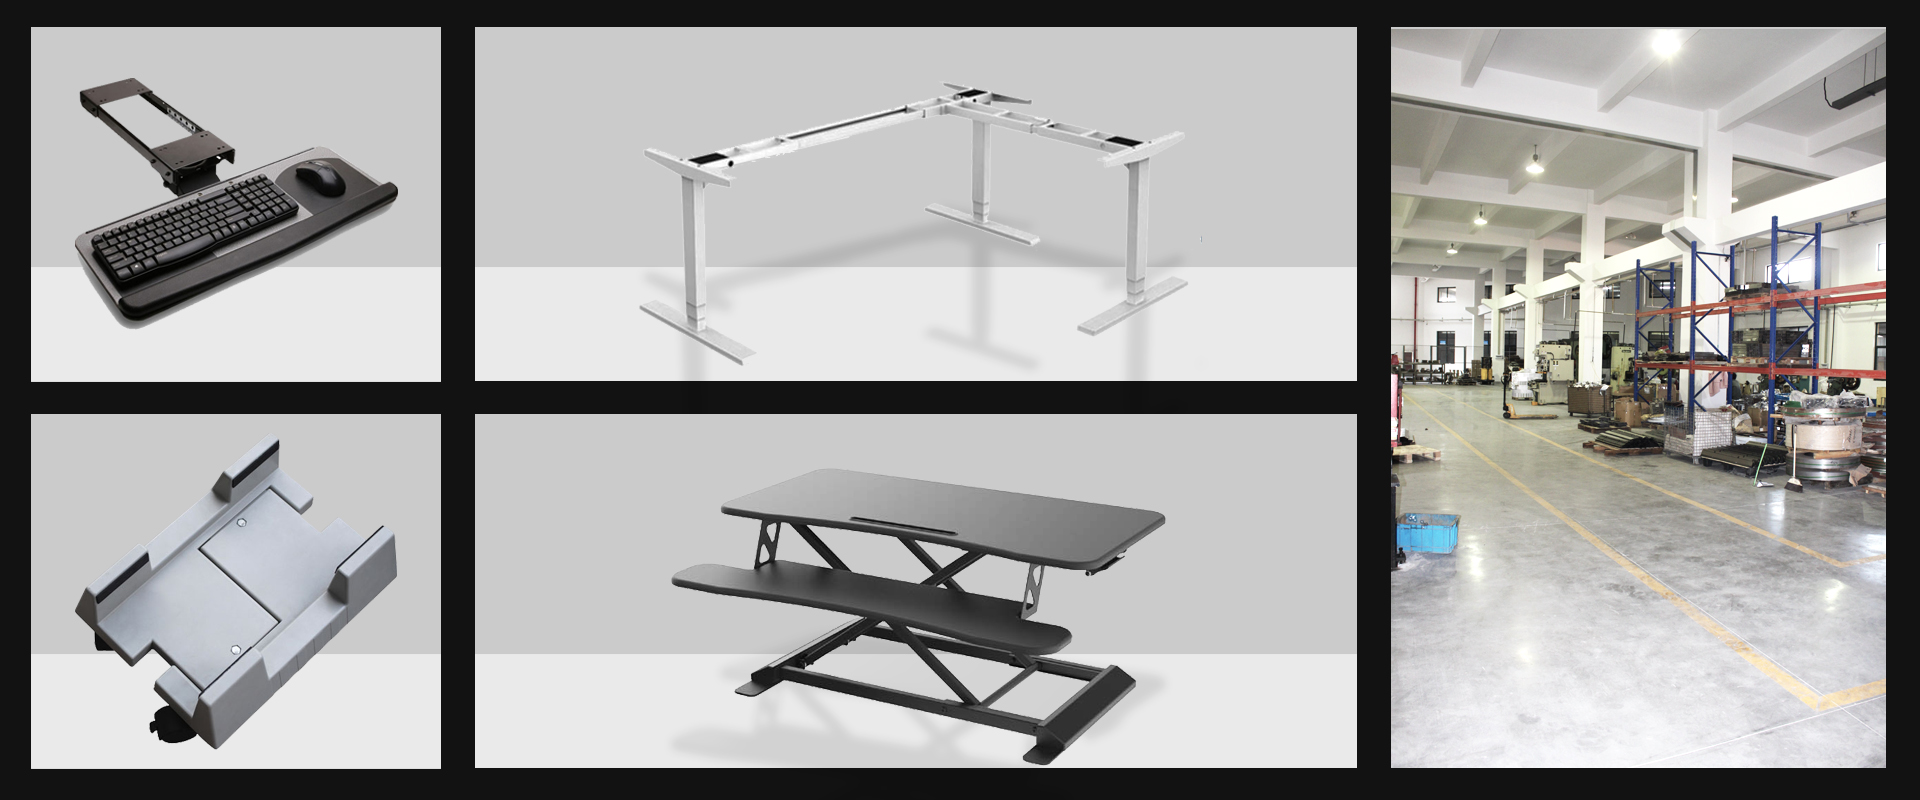 Deskromic is the main manufacture of height adjustable desk.